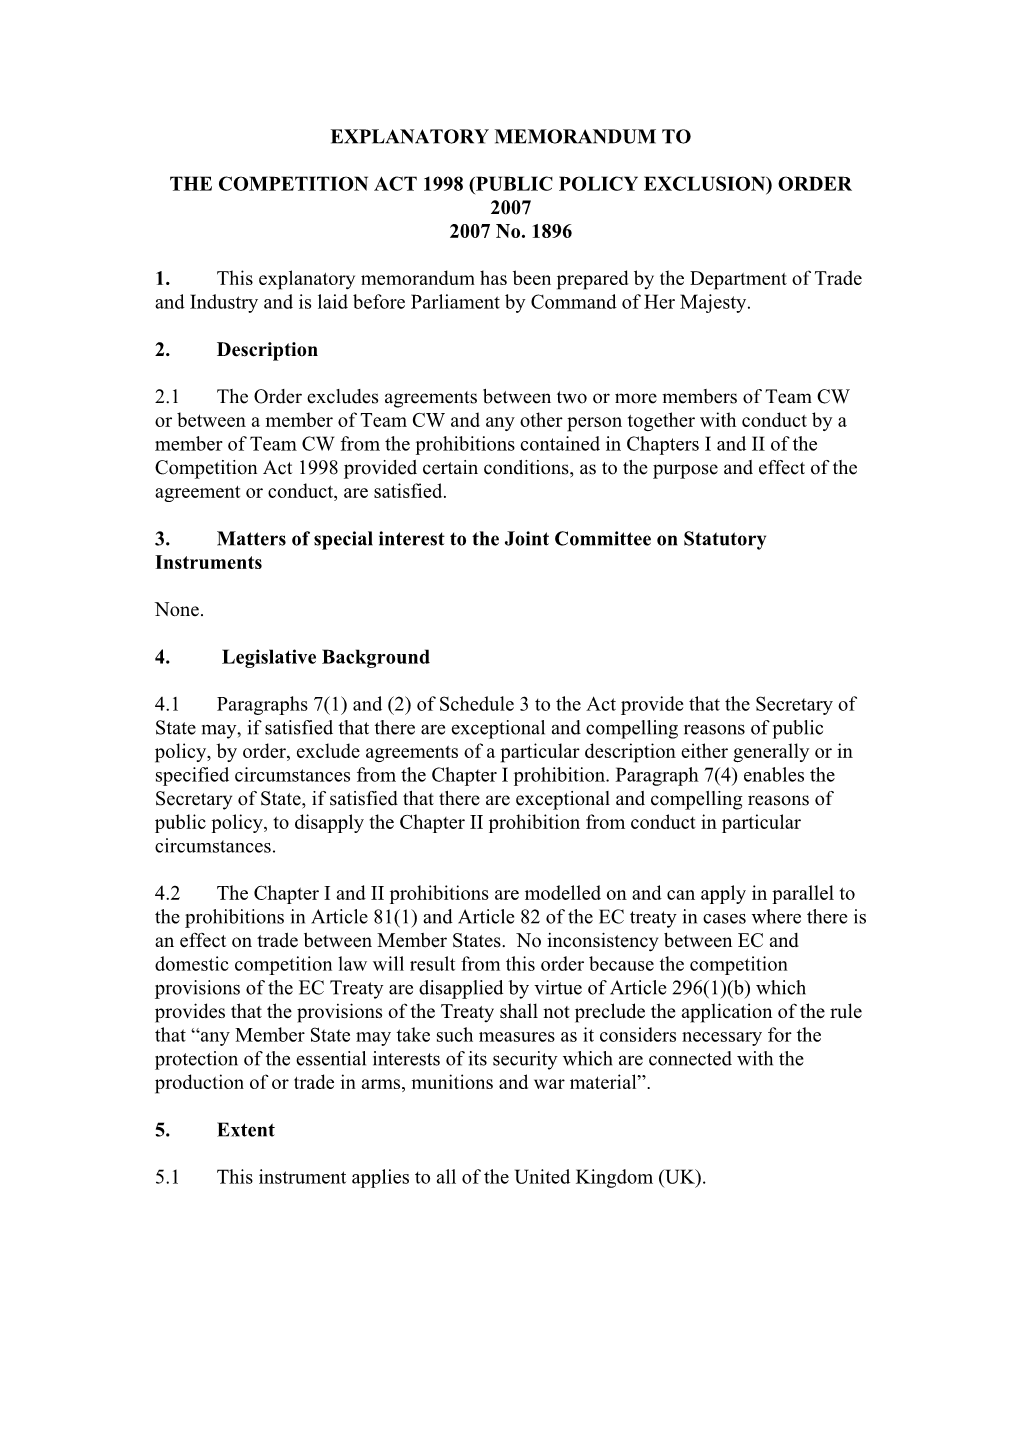 Explanatory Memorandum to the Competition Act 1998